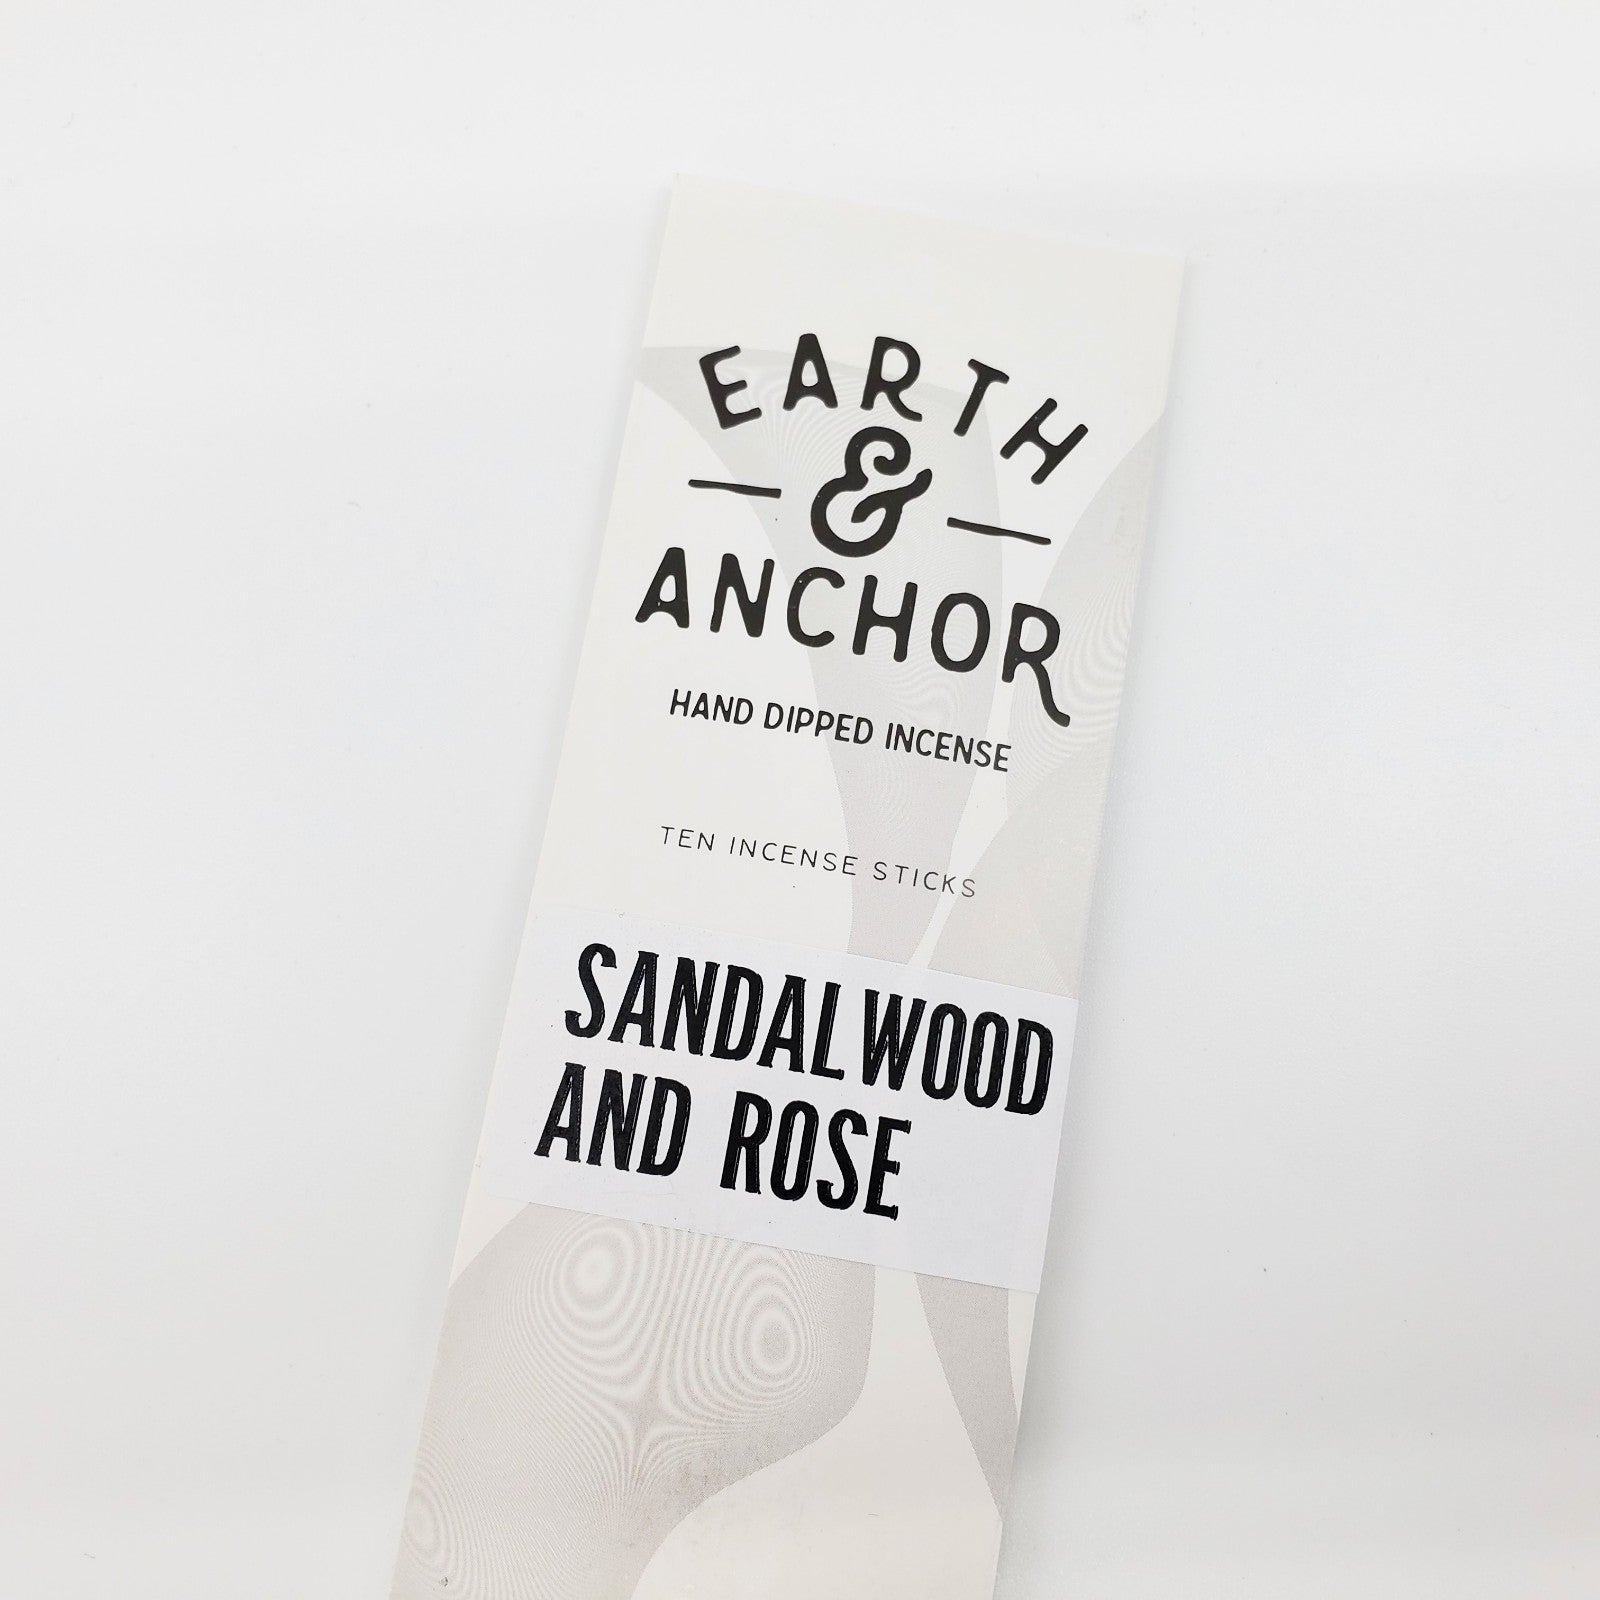 Sandalwood & Rose Incense - The Mockingbird Apothecary & General Store